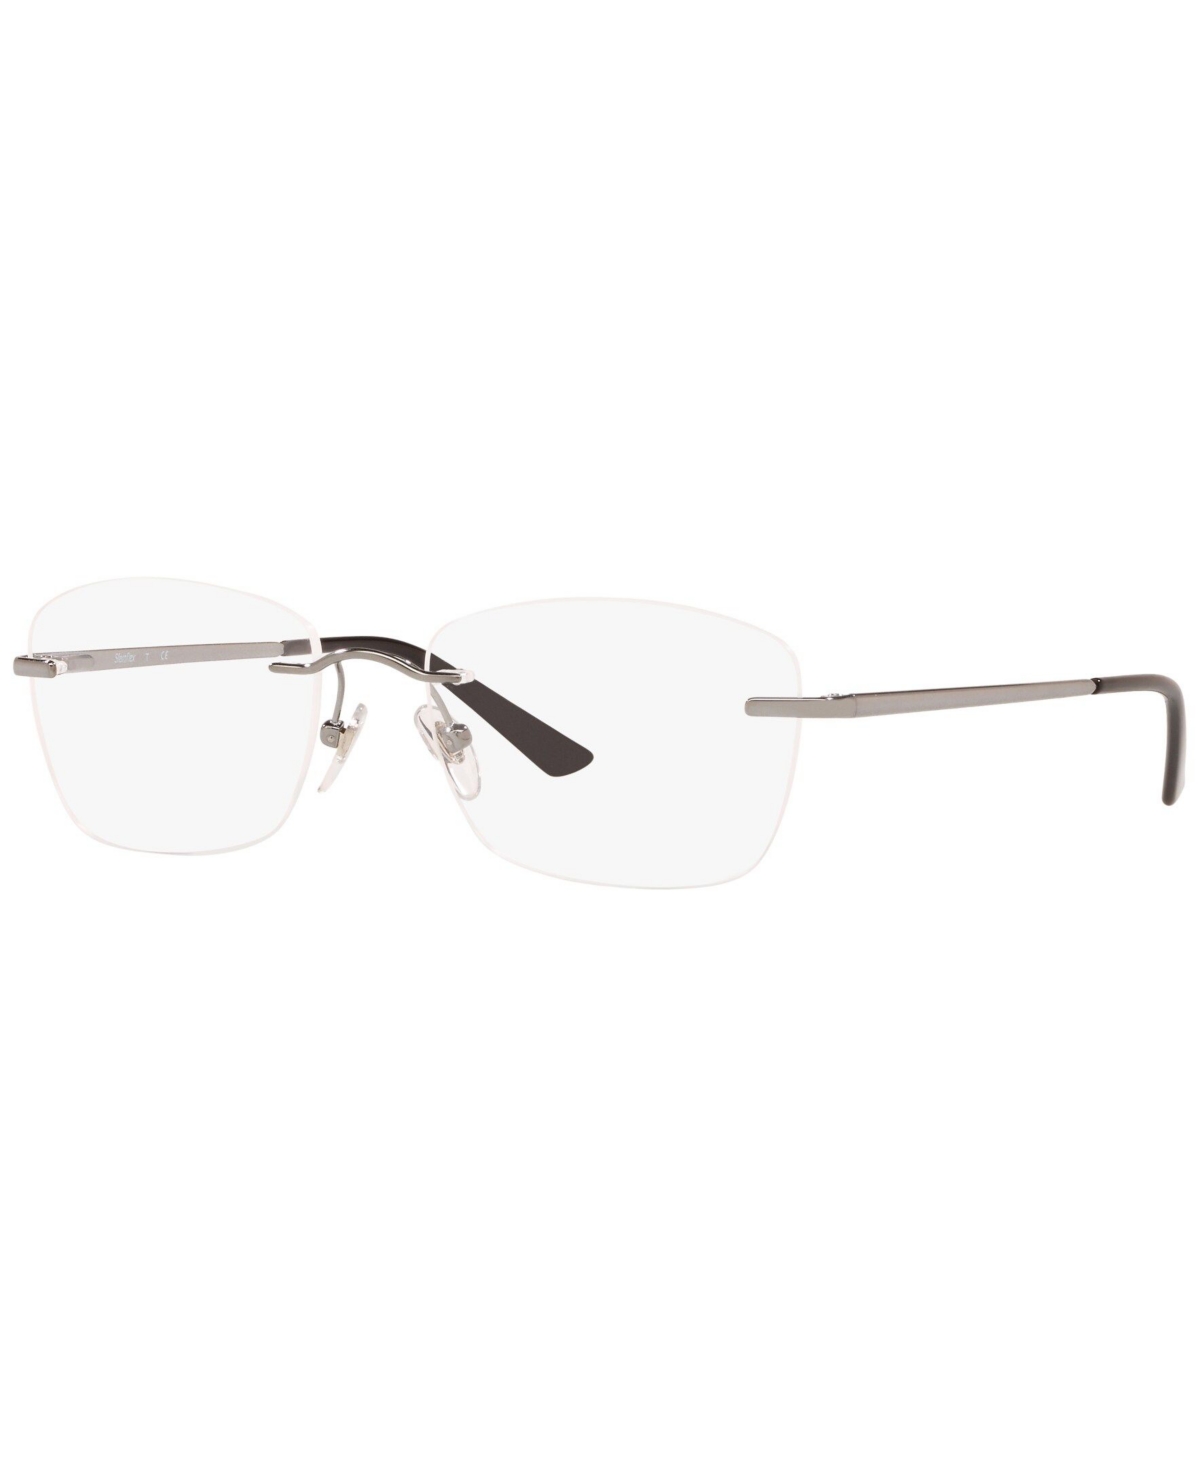 SF2599 Unisex Oval Eyeglasses - Gunmetal